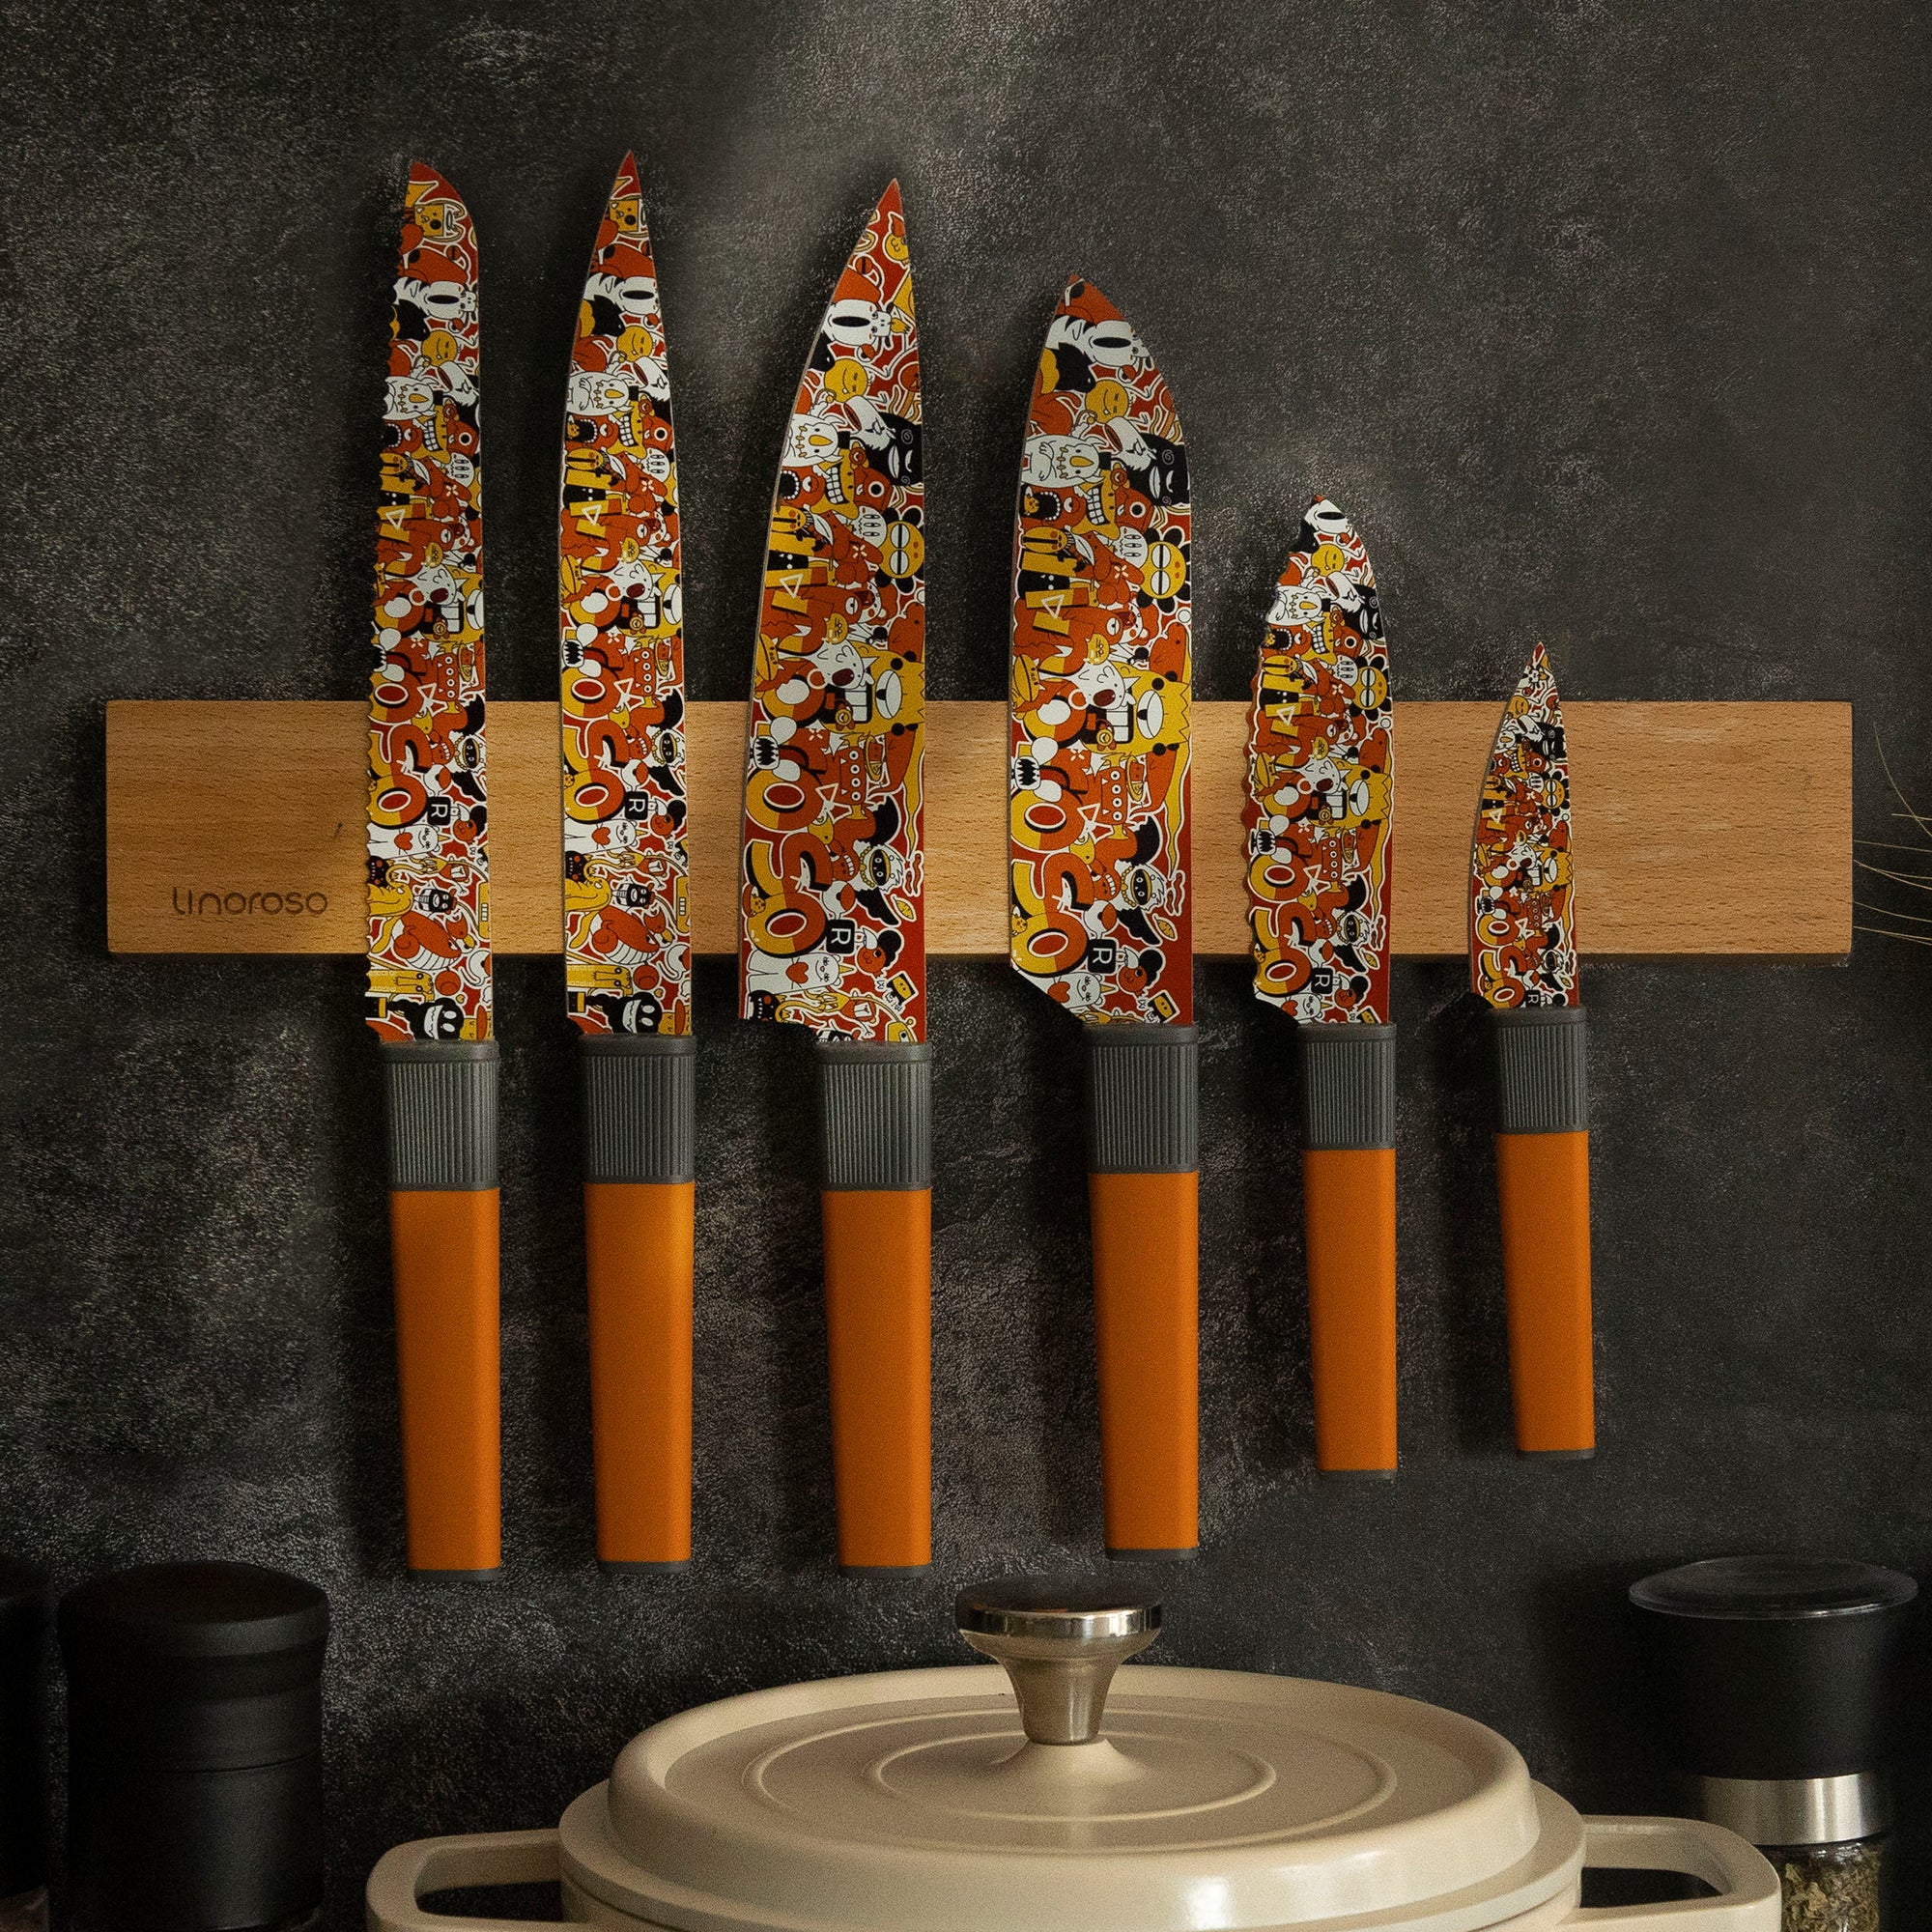 linoroso Kitchen Knife Set 6 Pieces